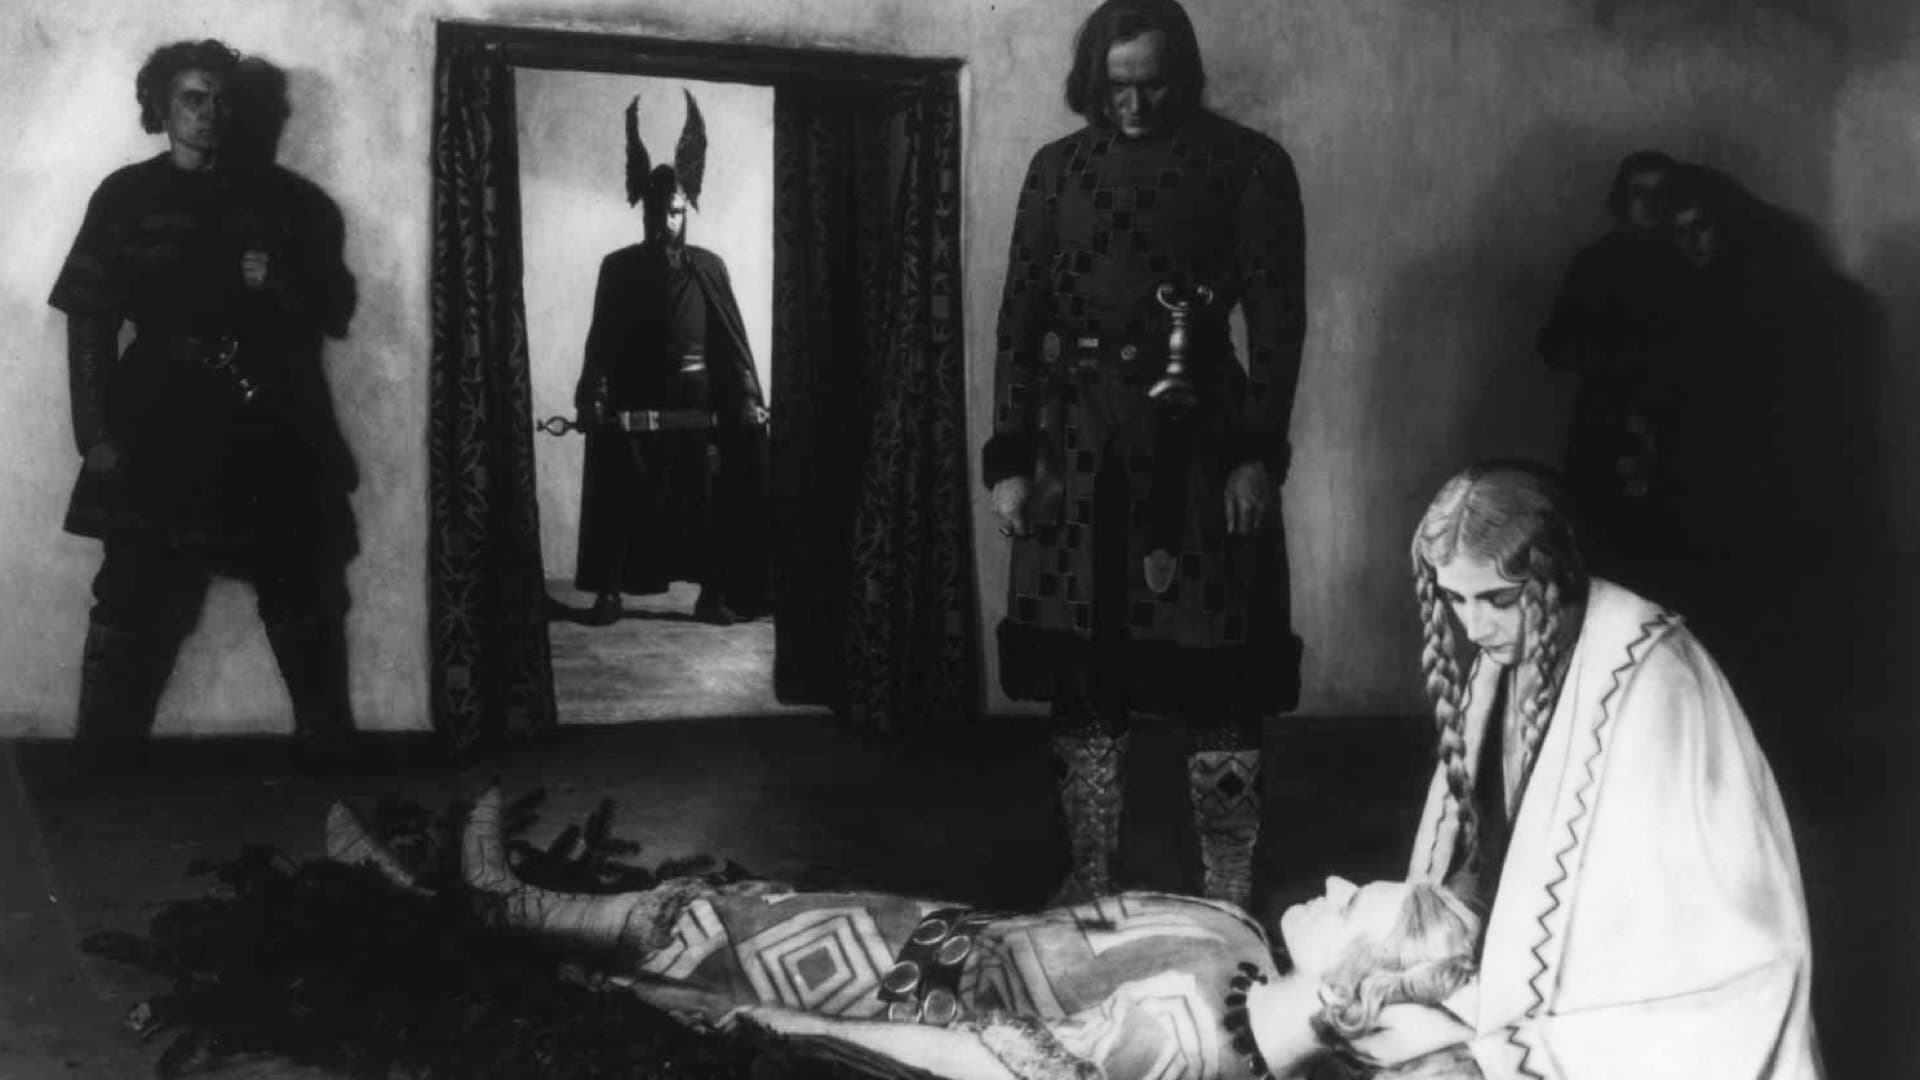 Image du film Les Nibelungen : la mort de Siegfried h924sqtyziq1kllhhw5itazudyqjpg